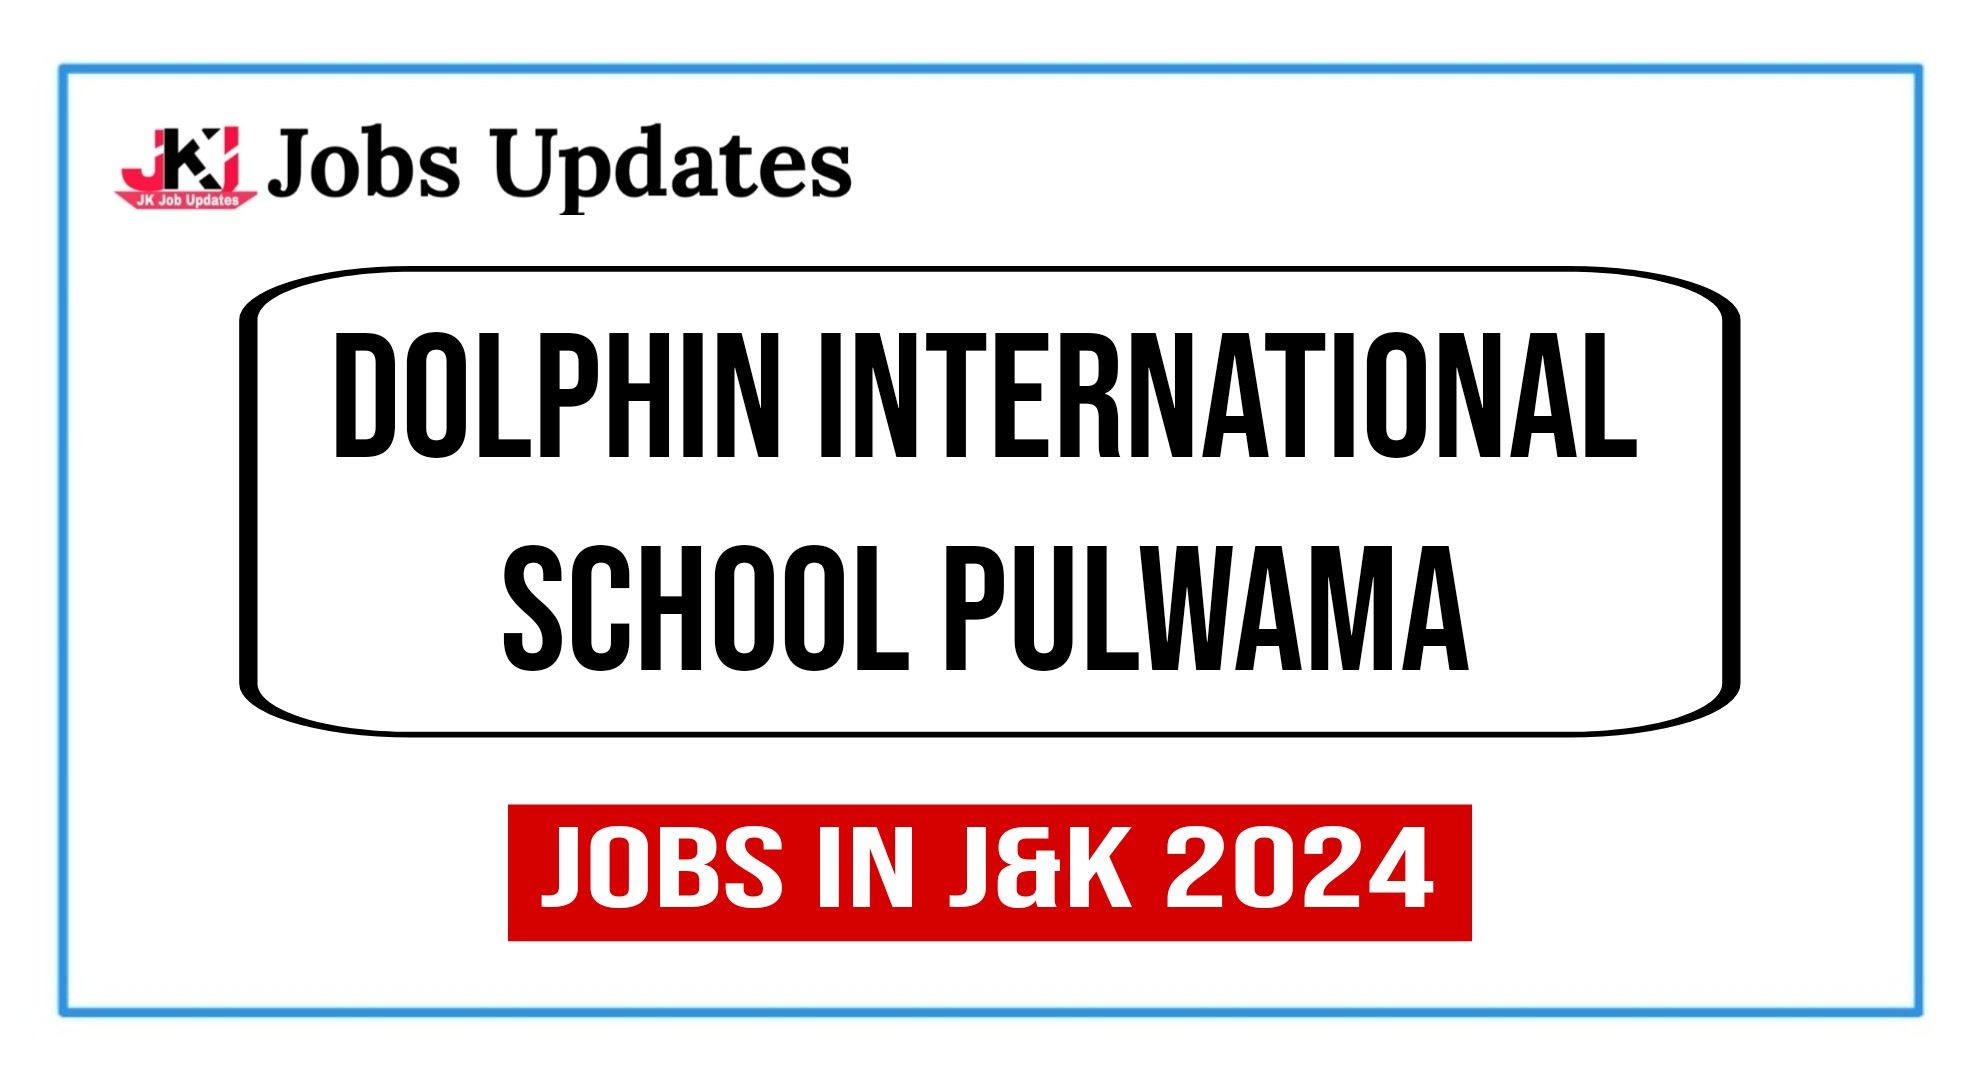 dolphin international school pulwama jobs openings 2024